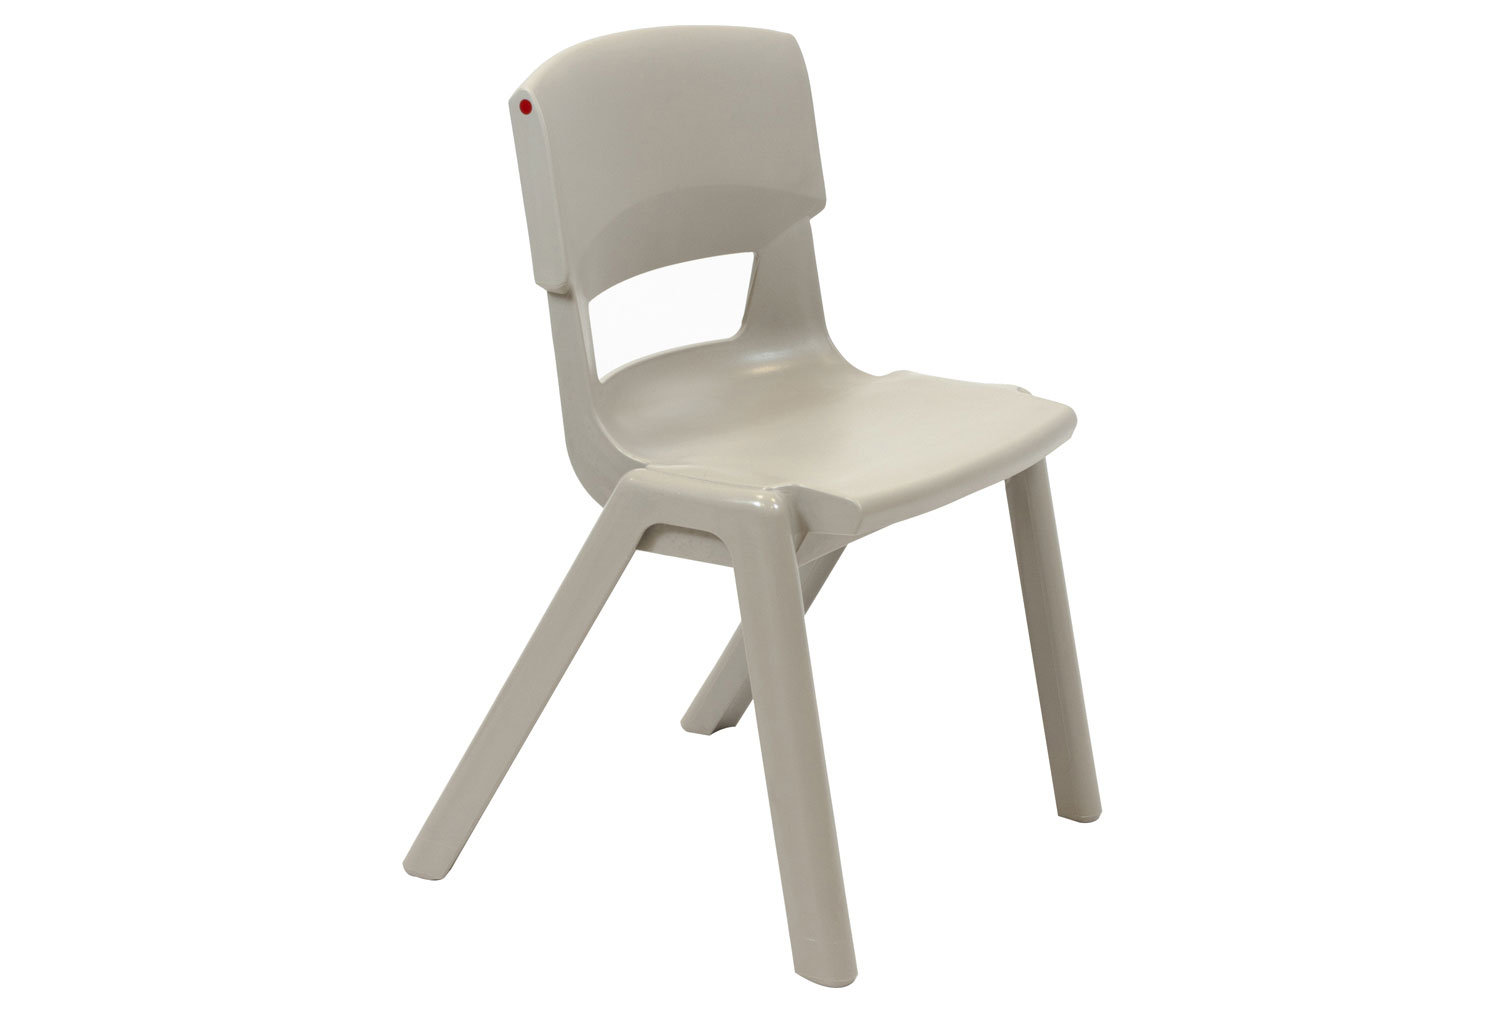 Qty 10 - Postura+ Classroom Chair, 8-11 Years - 34wx31dx38h (cm), Ash Grey